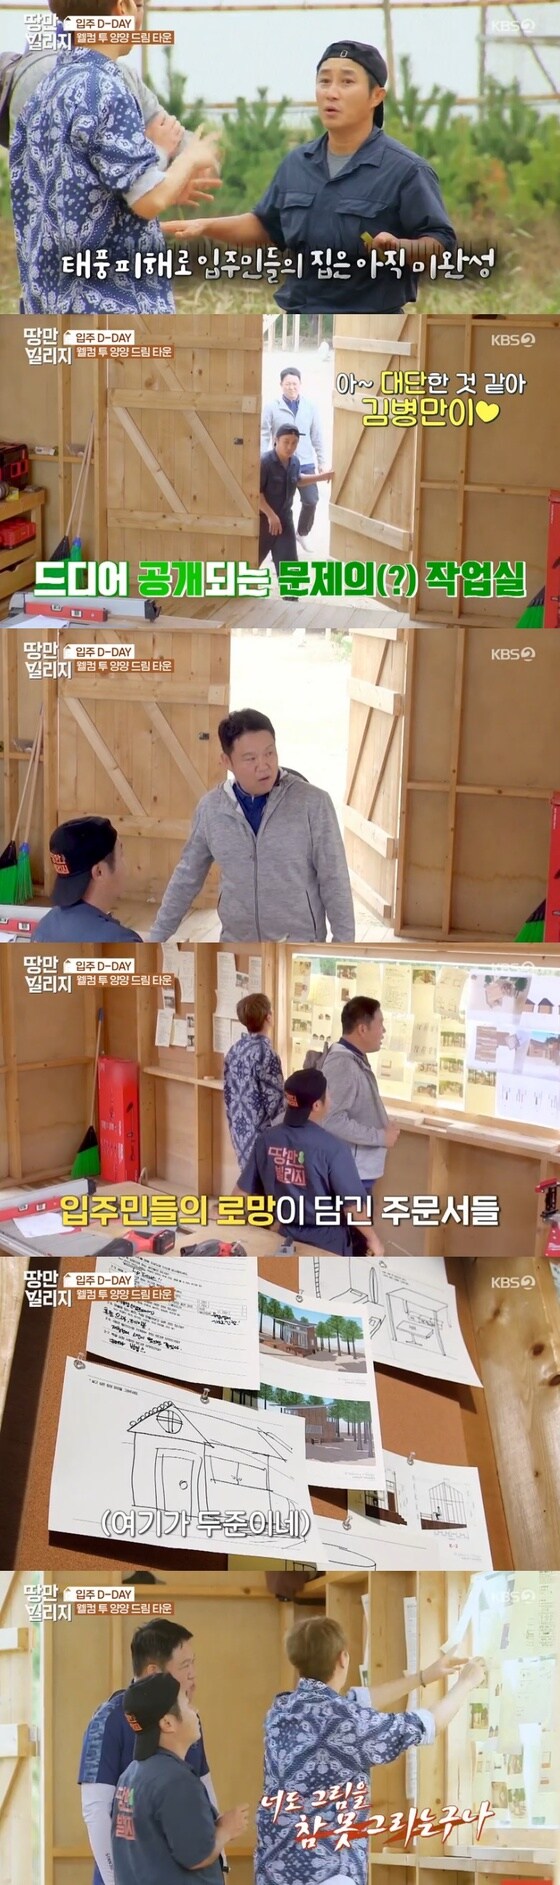 KBS 2TV '땅만빌리지' 캡처 © 뉴스1